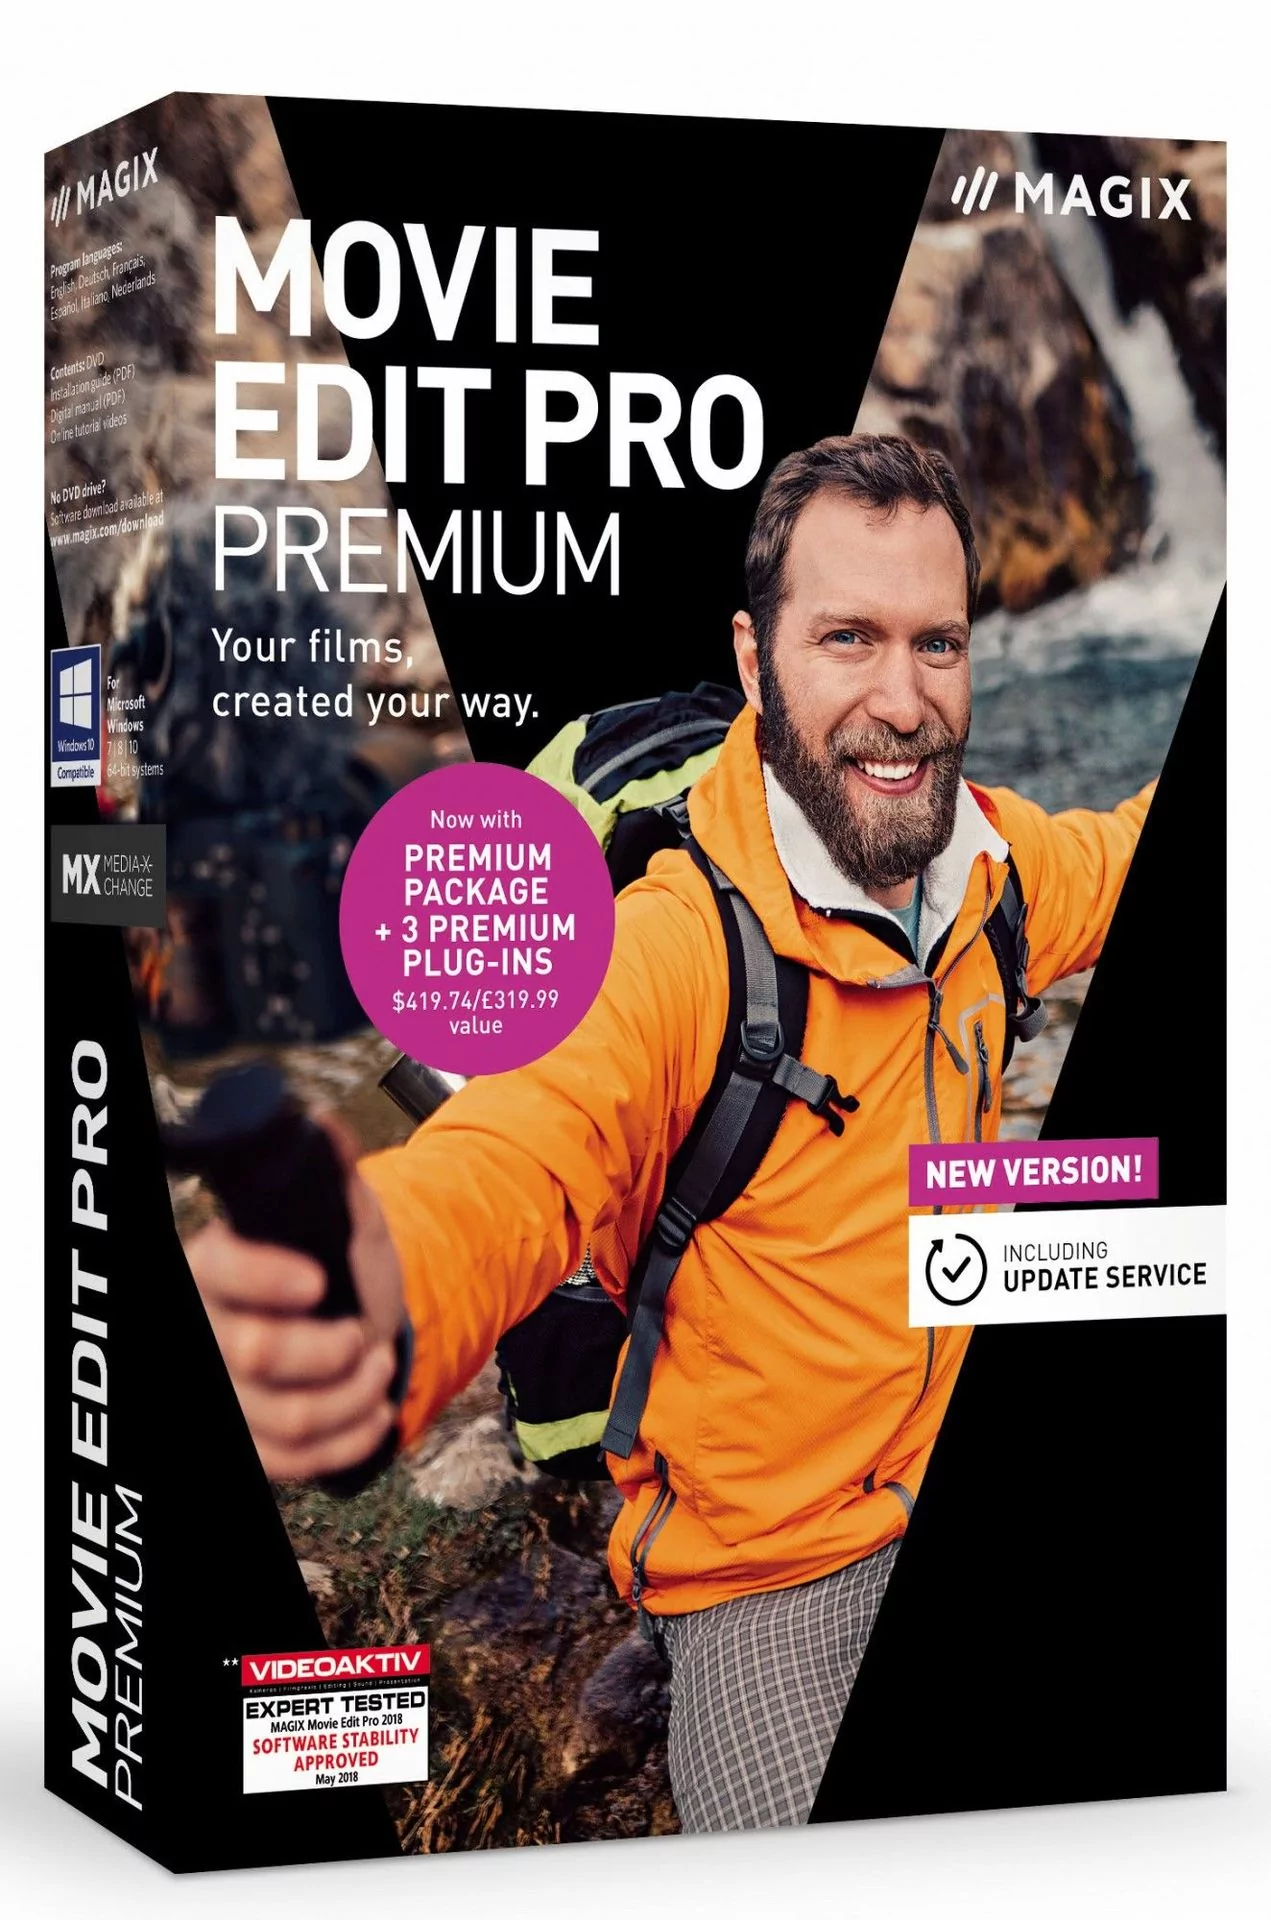 MAGIX Movie Edit Pro Premium (2021) - ESD - cyfrowa